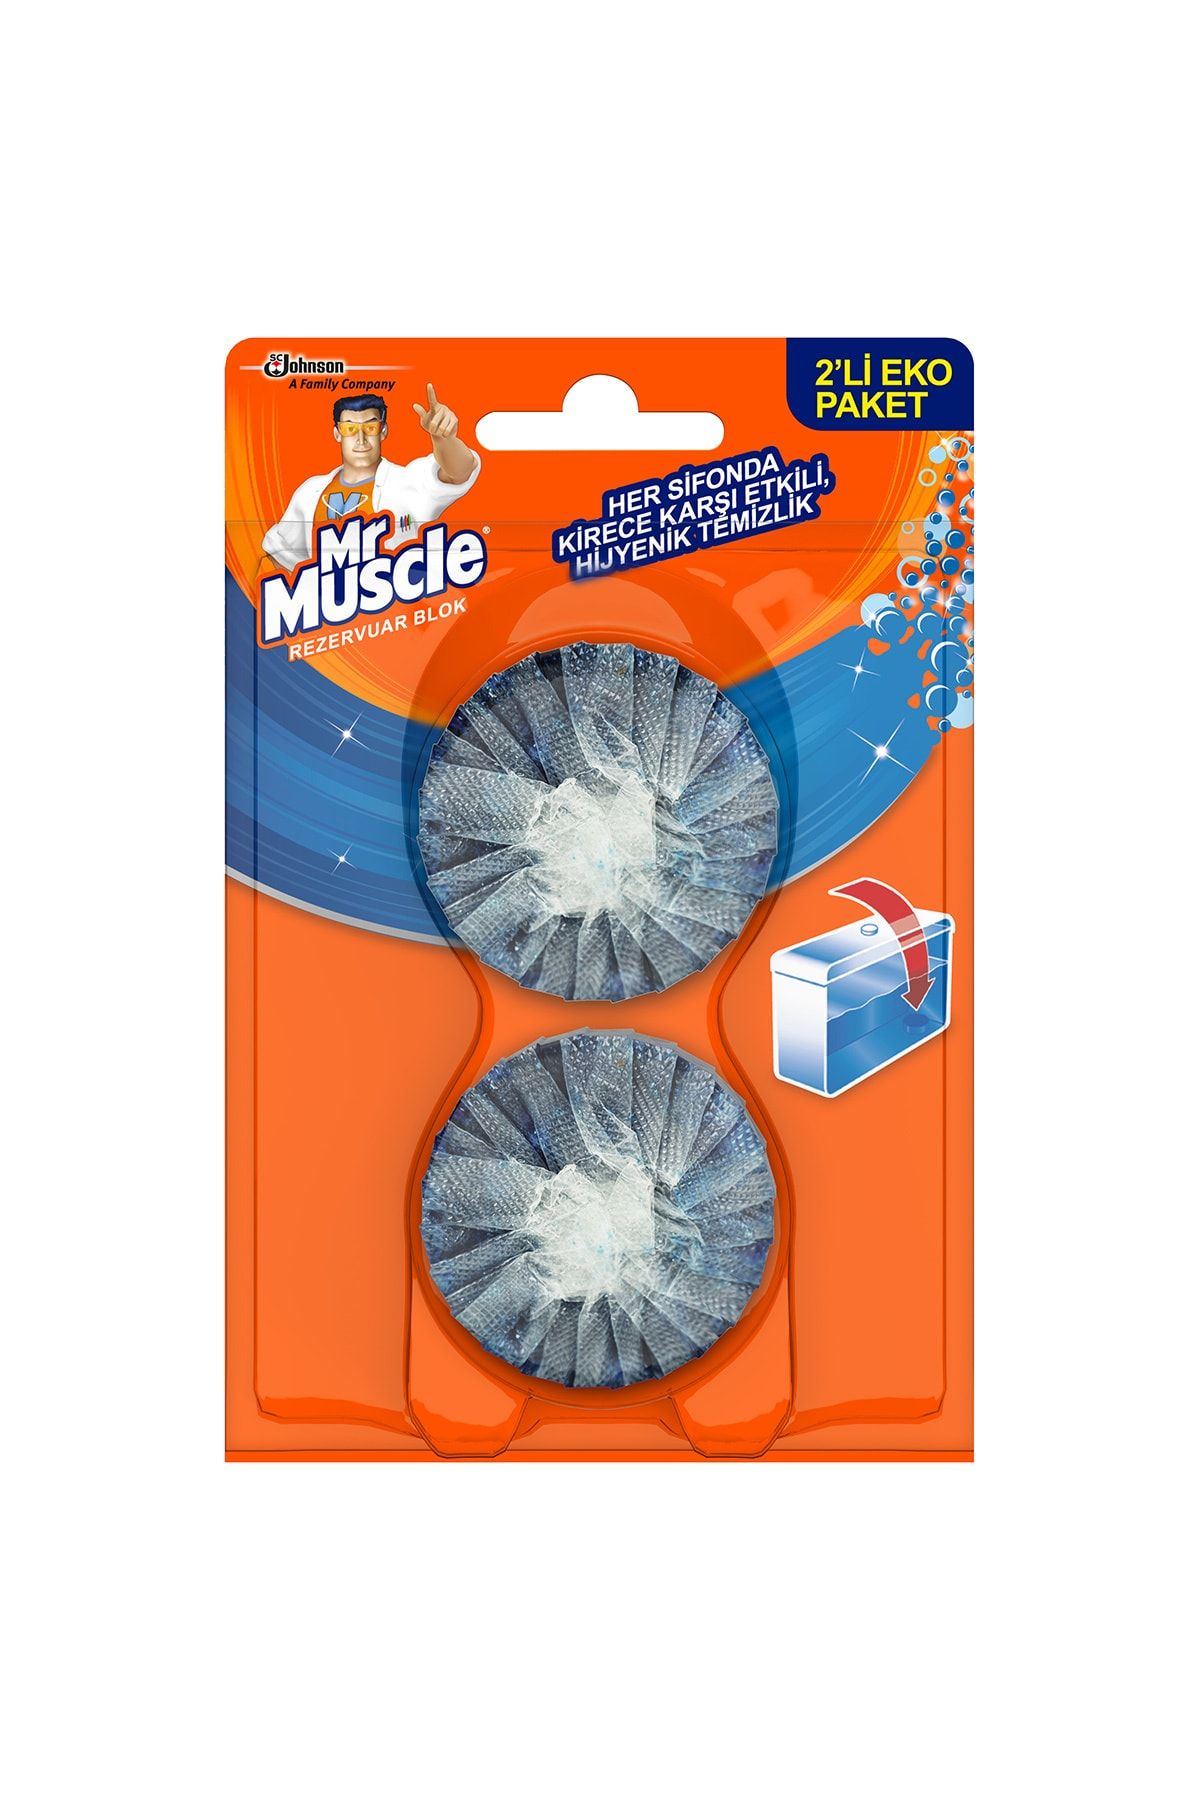 Mr. Muscle Mr Muscle Rezervuar Blok Tuvalet Temizleyici, 2'li Ekonomik Paket, 2x48 g